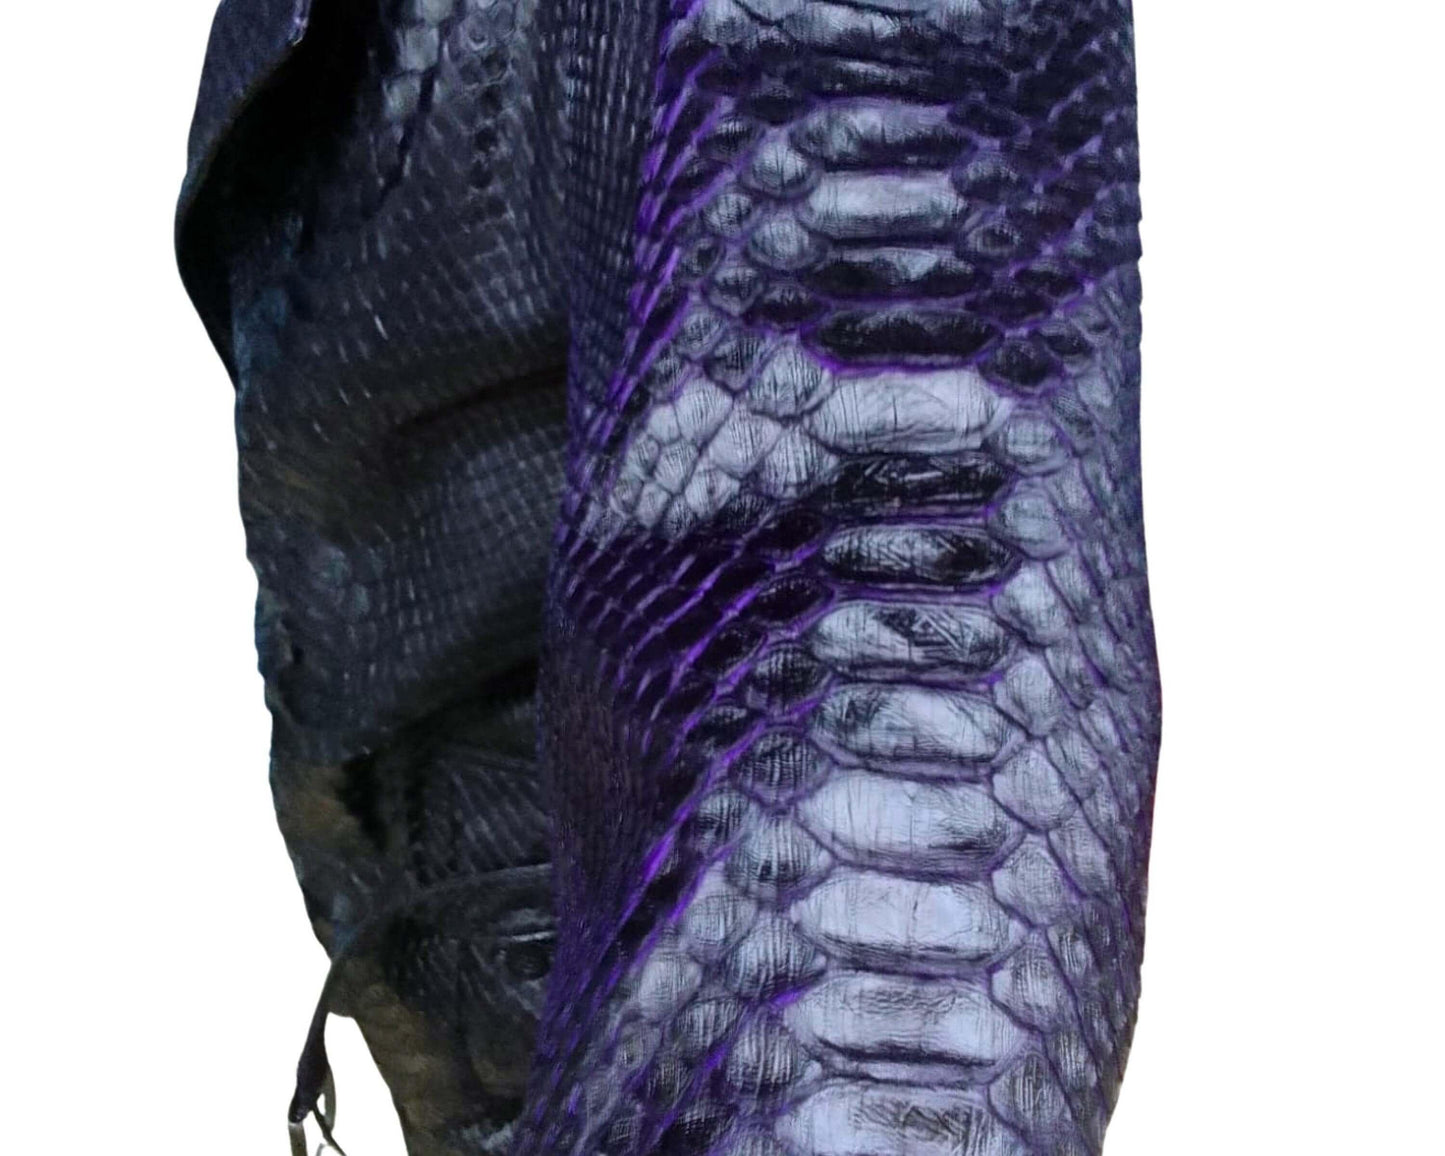 Snakeskin Trench Coats Python Jacket by LFM Fashion